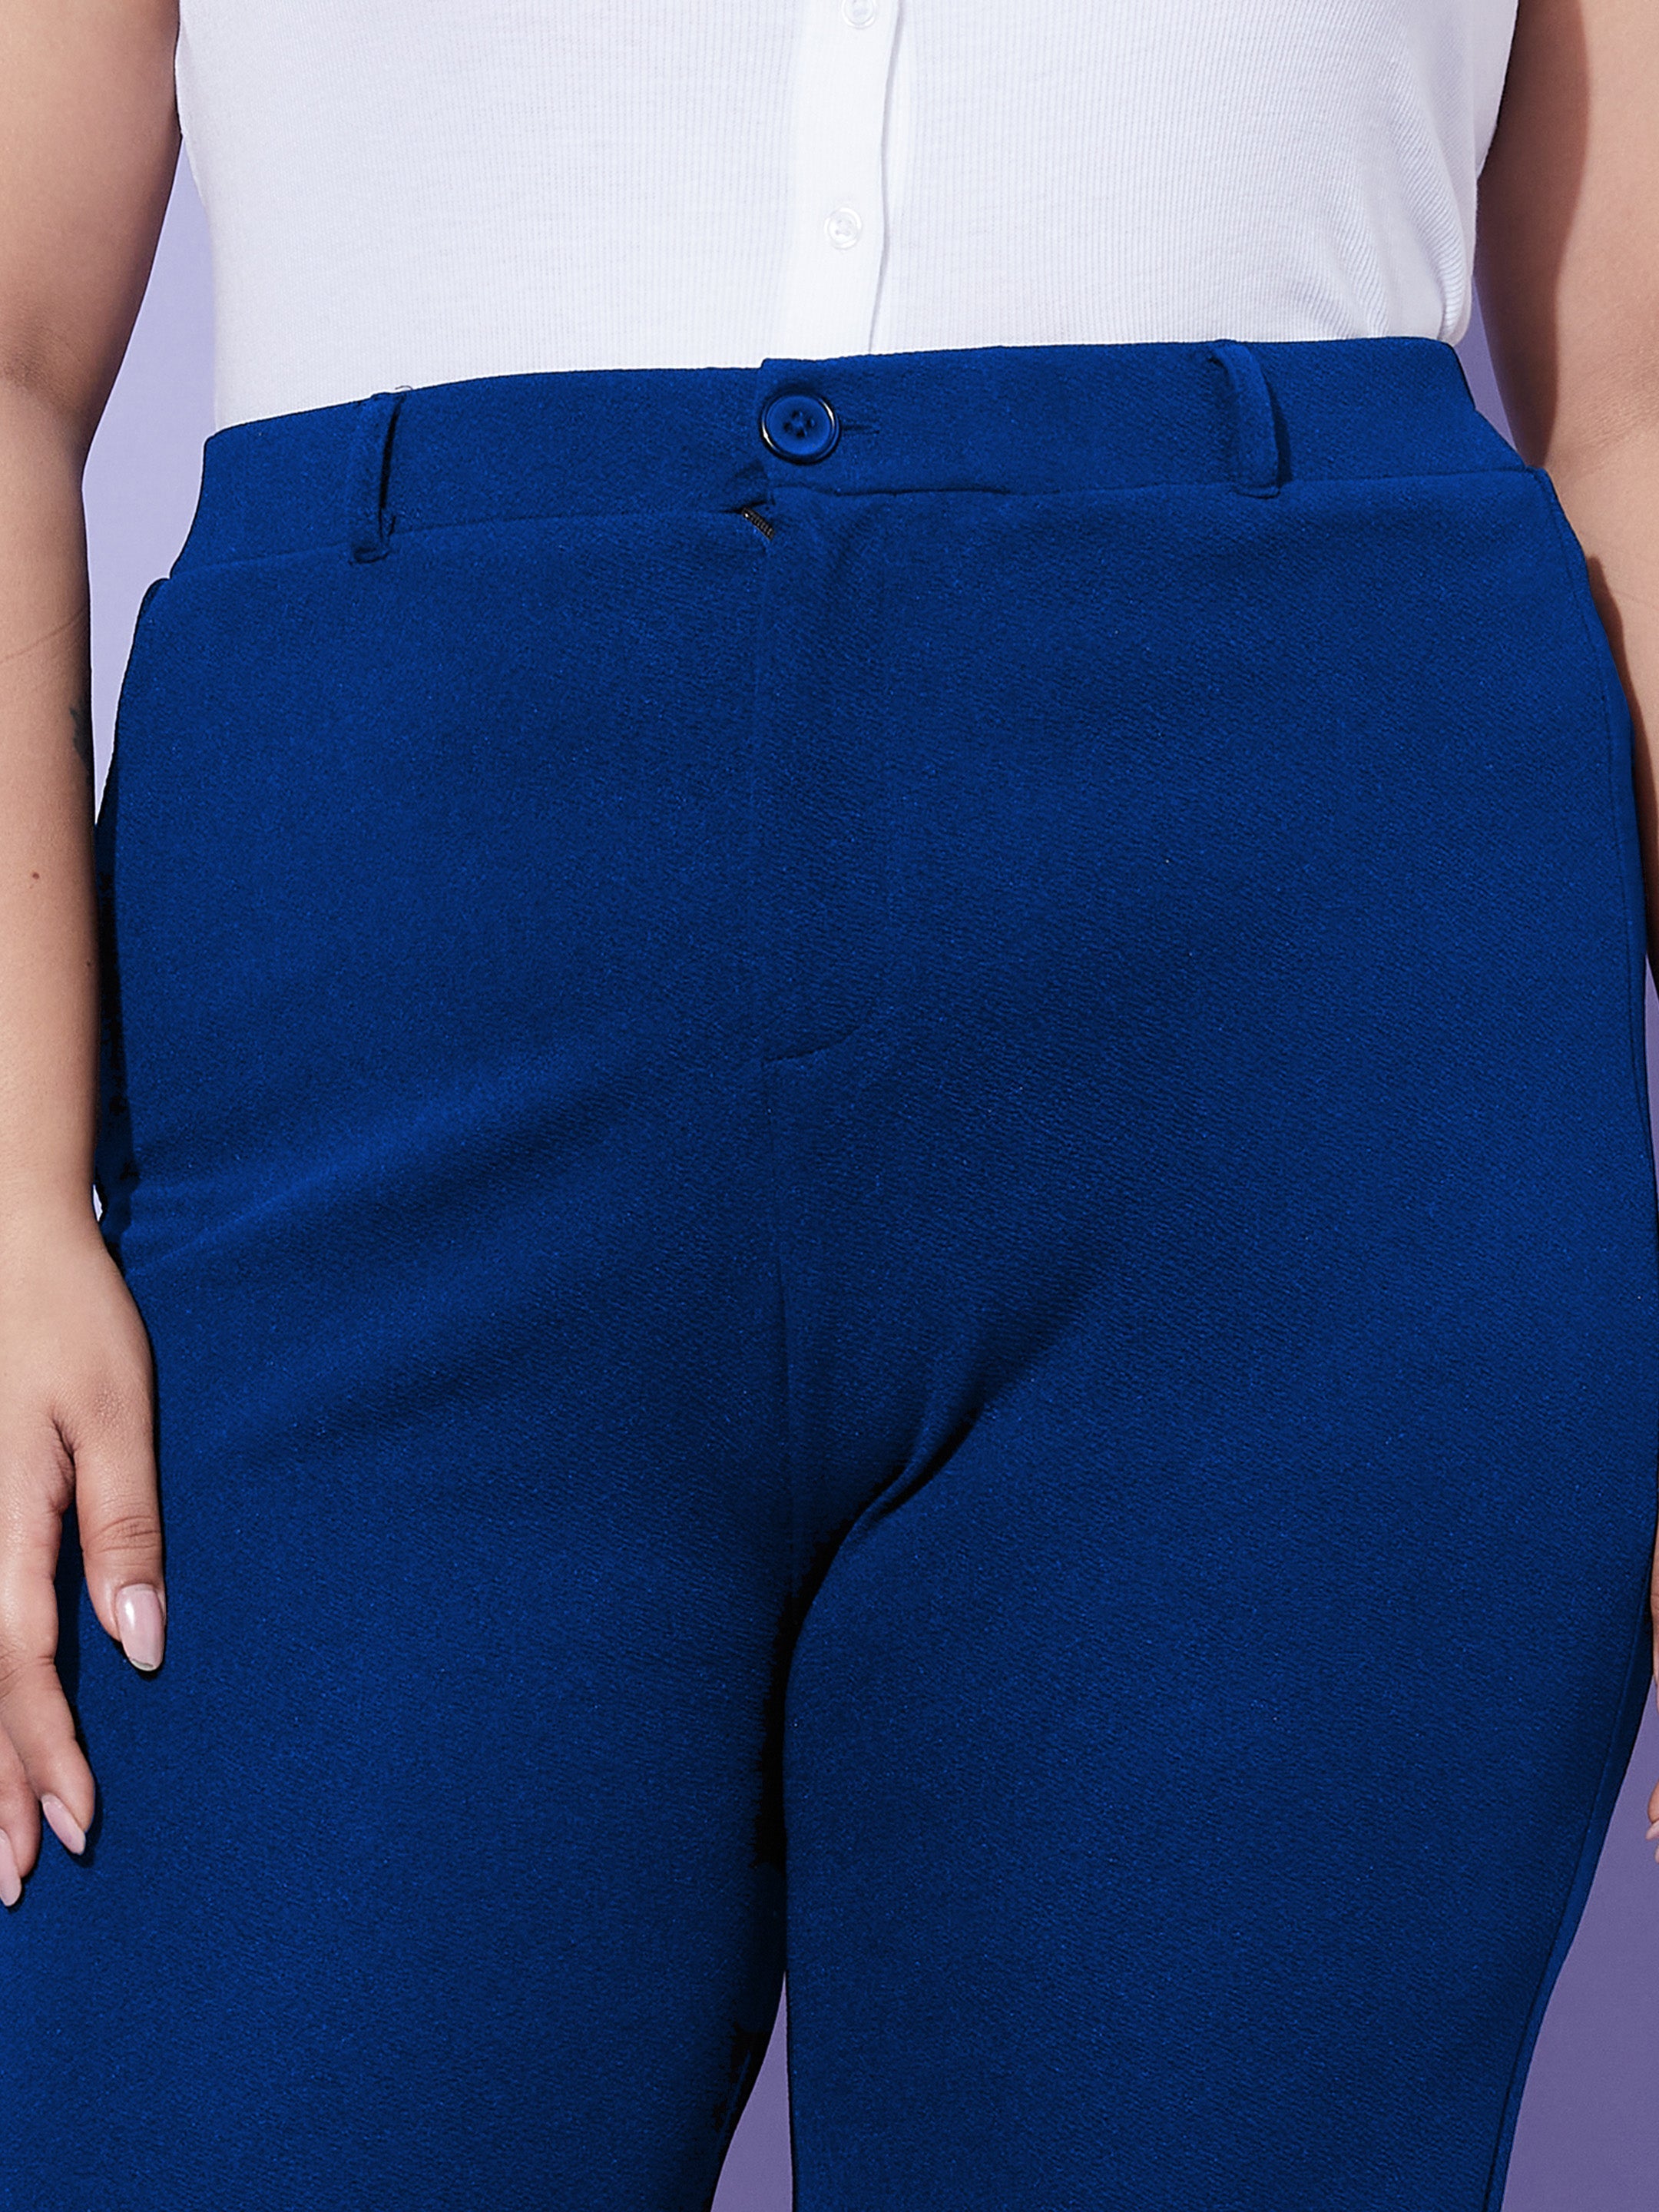 Women's Royal Blue Peplum Top With Kick Pleats Pants - SASSAFRAS